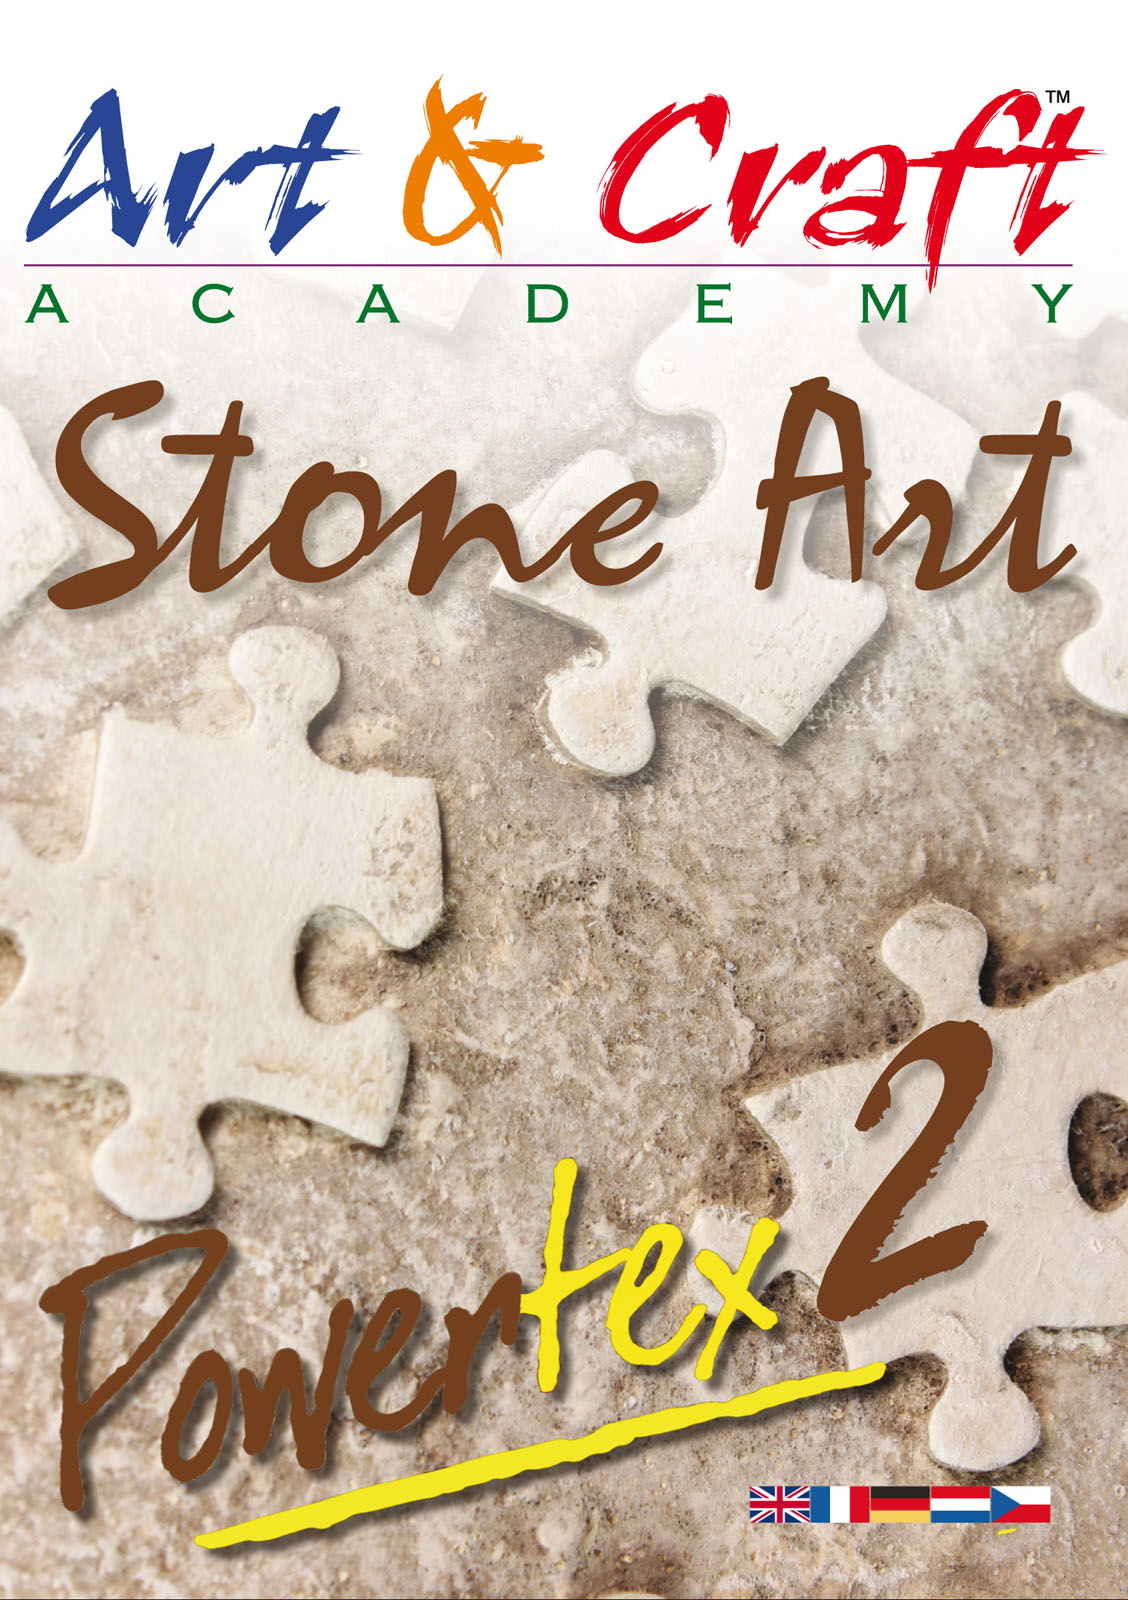 Powertex • DVD 2 stone art